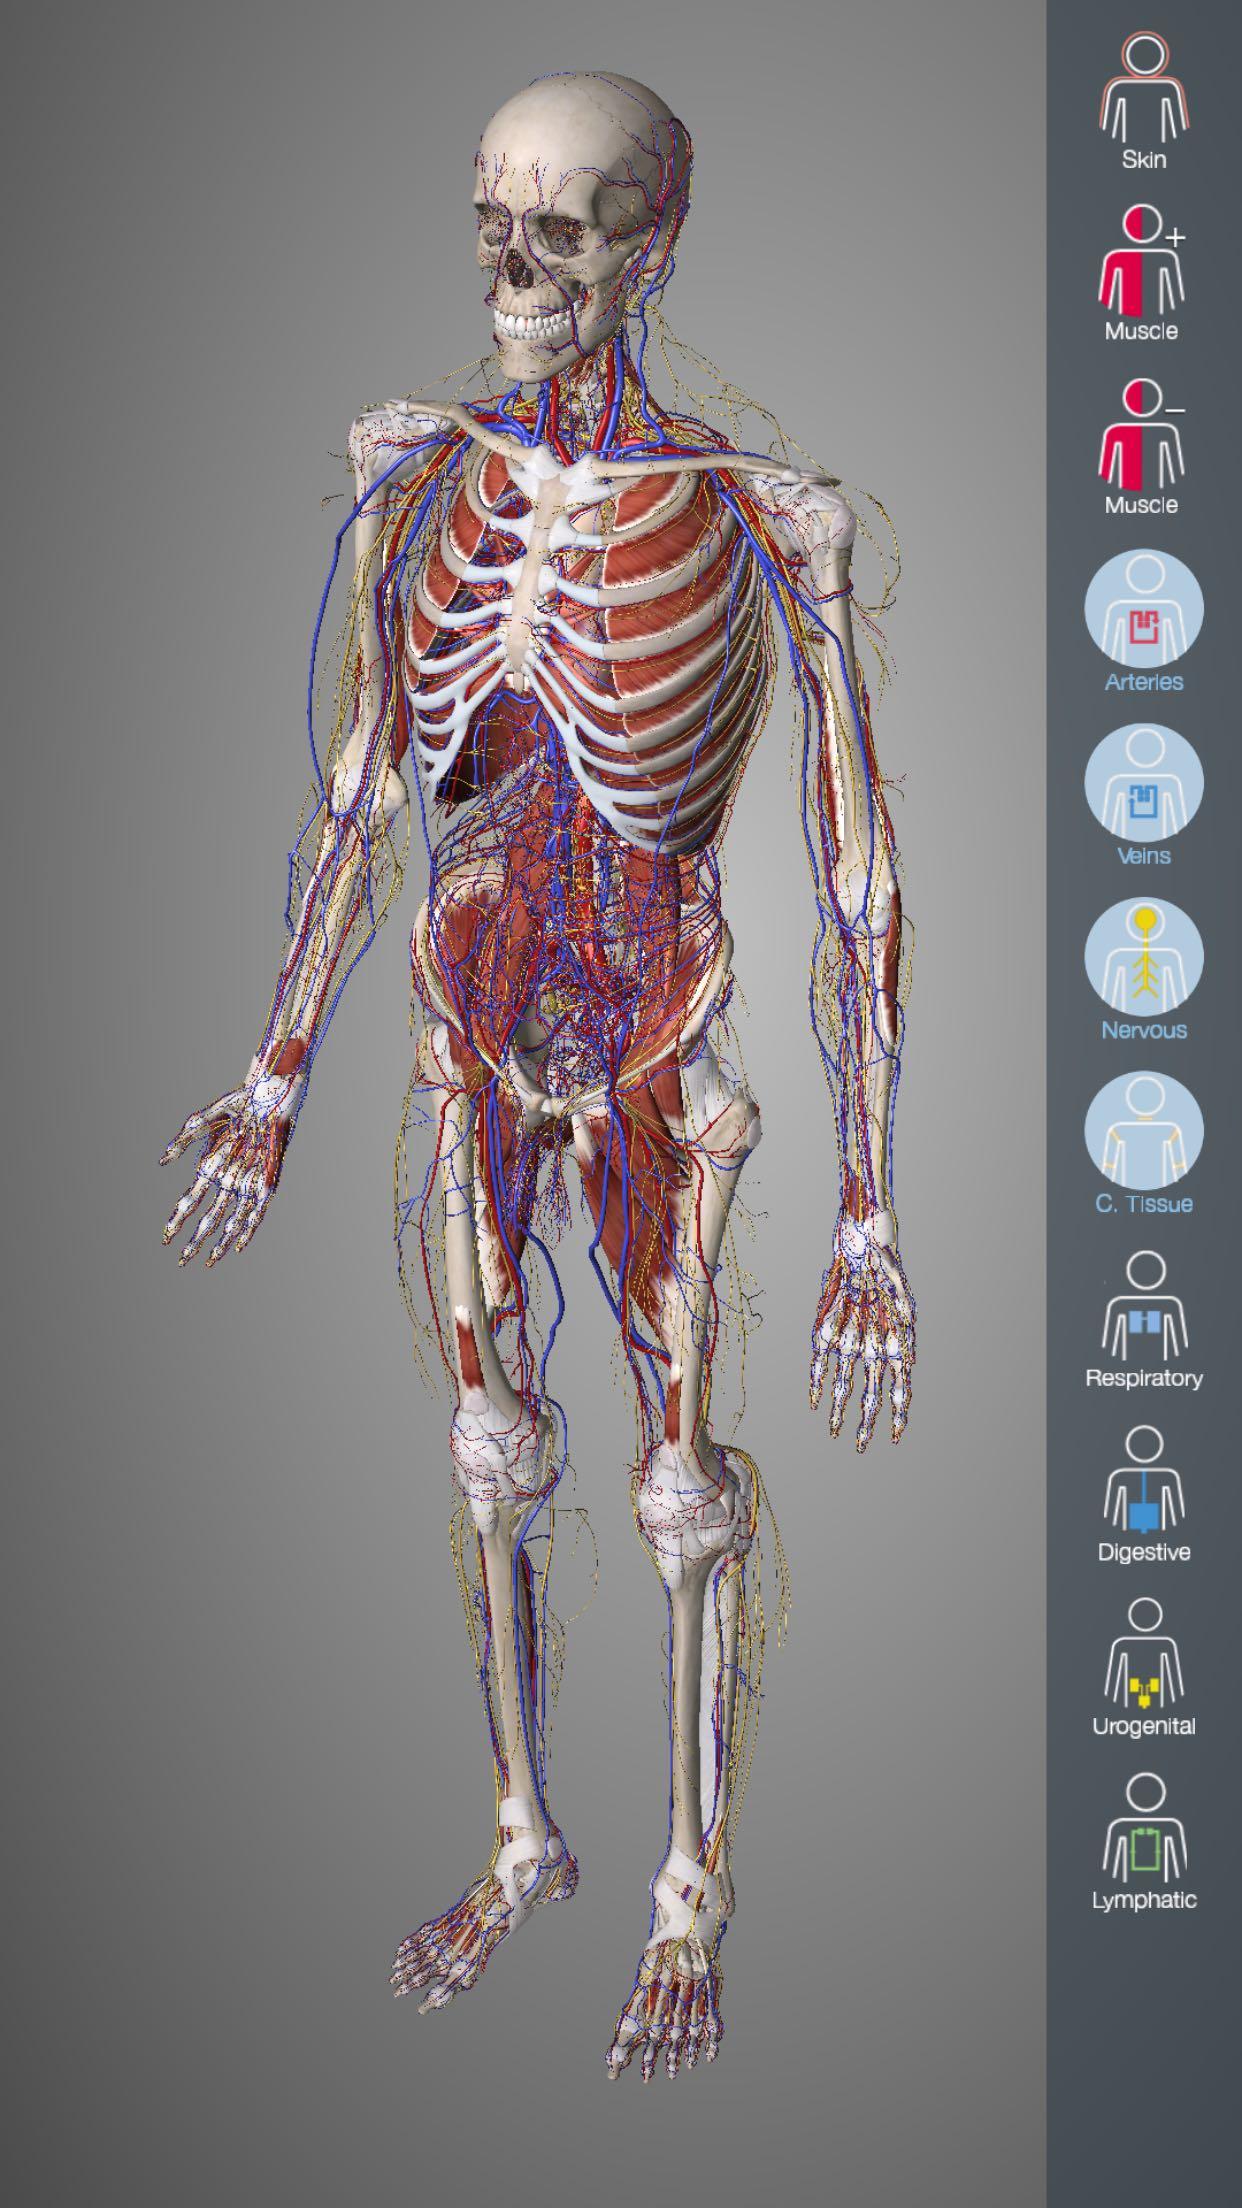 essential anatomy ipad app